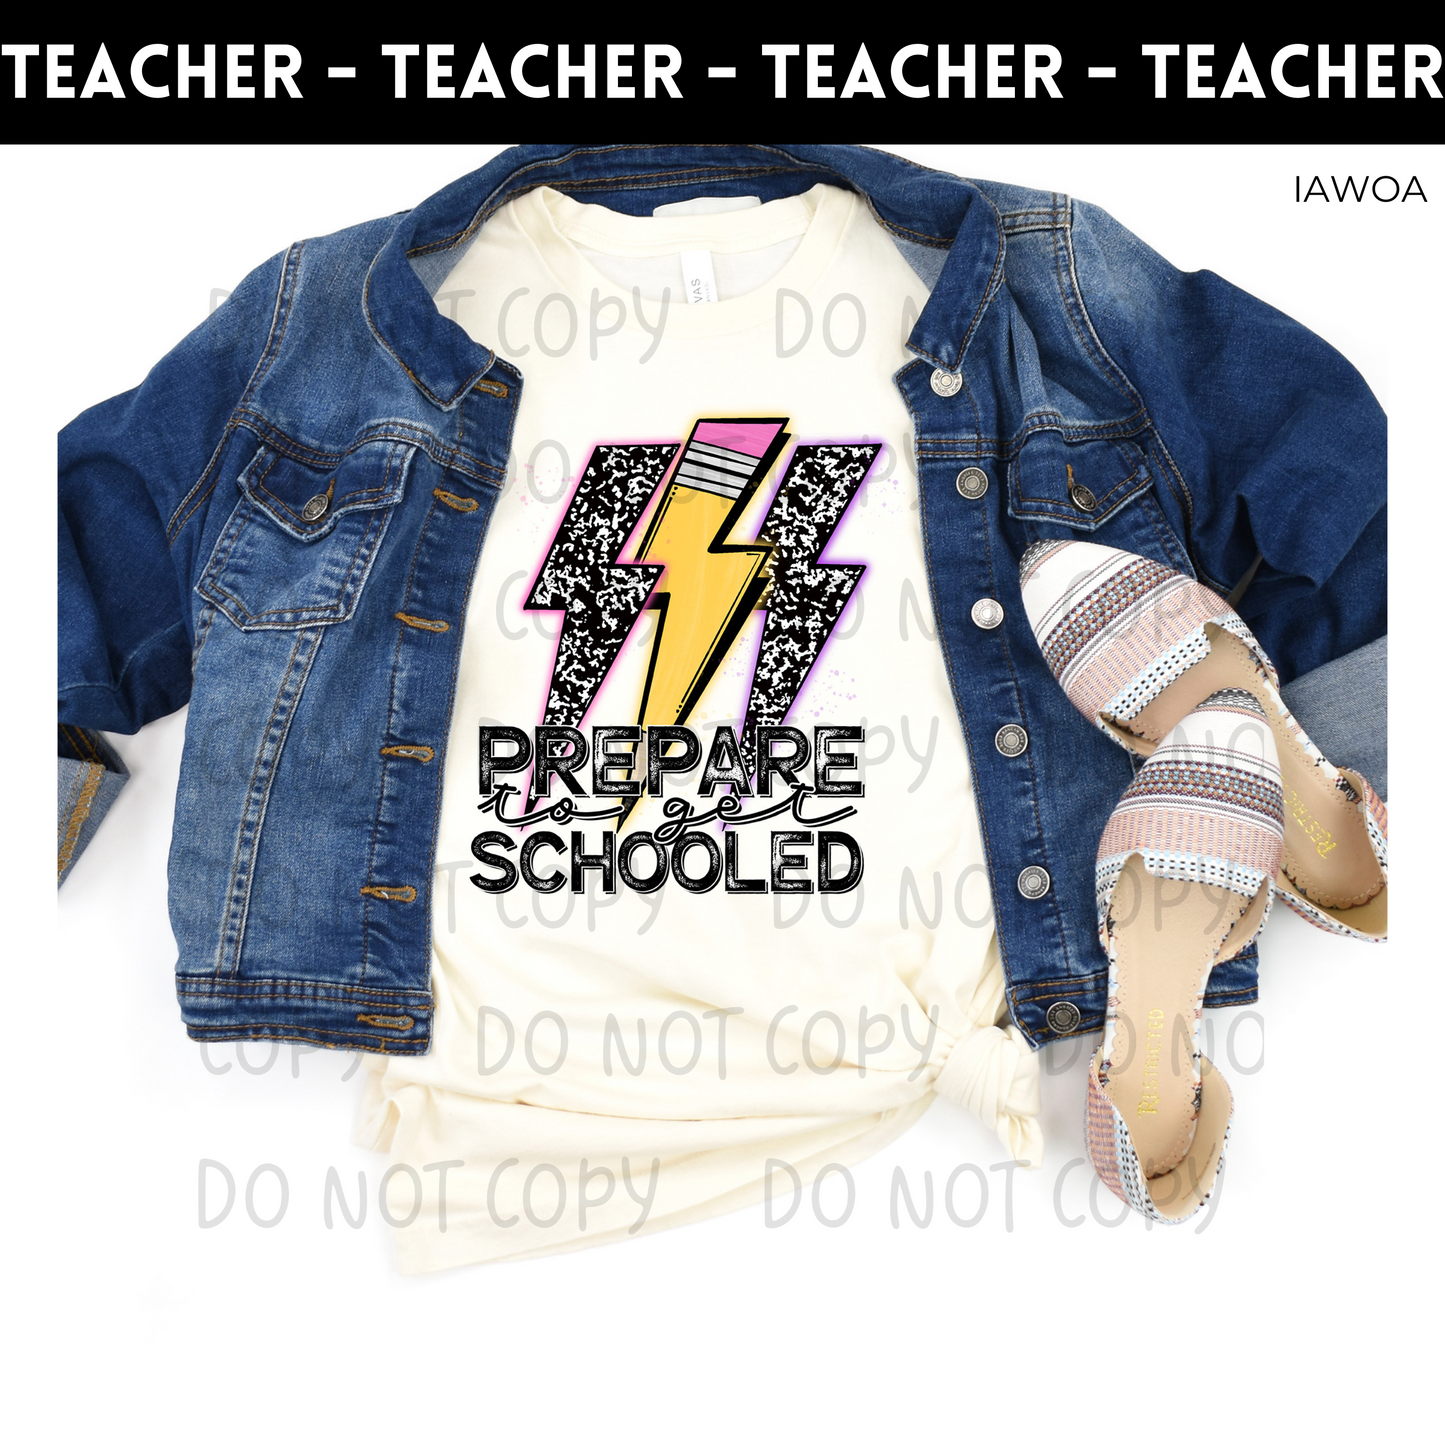 Prepare To Get Schooled Adult Shirt- Teachers 210